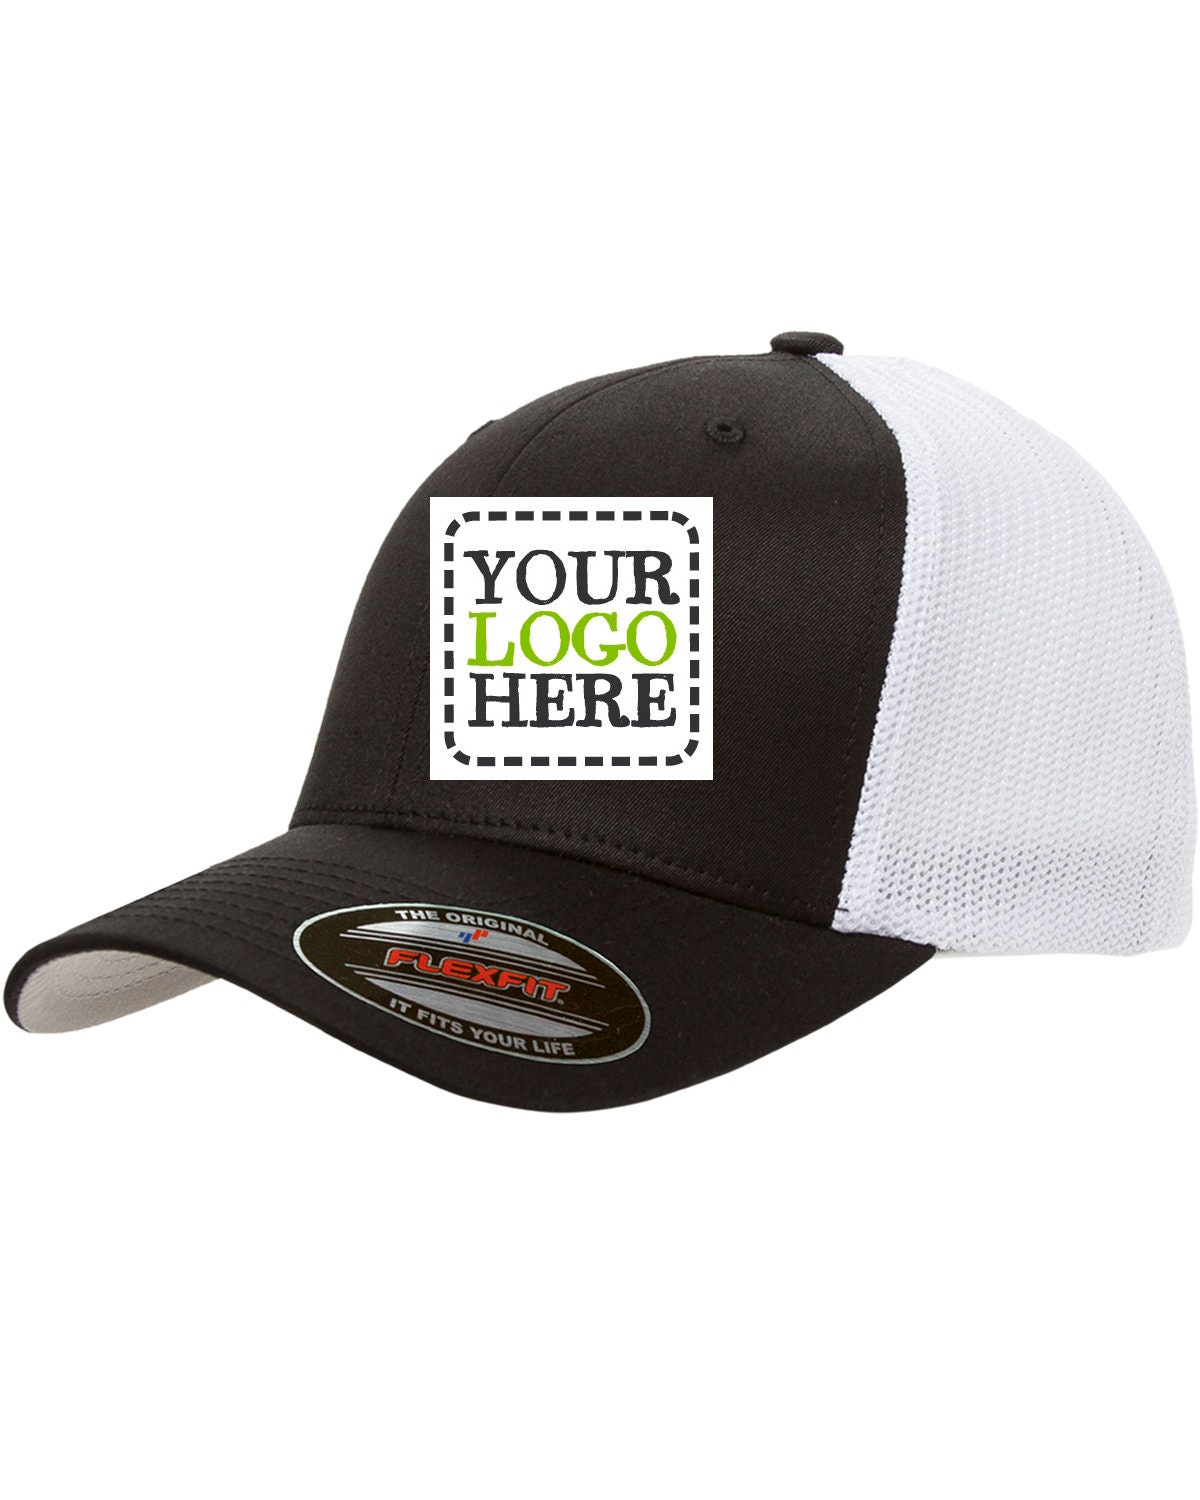 Wholeslae Flexfit Trucker Hat / Logo Embroidered / Hat - / Custom / Personalized Hat Hat Business / Etsy / Customized Hat Hat Business Custom Mens